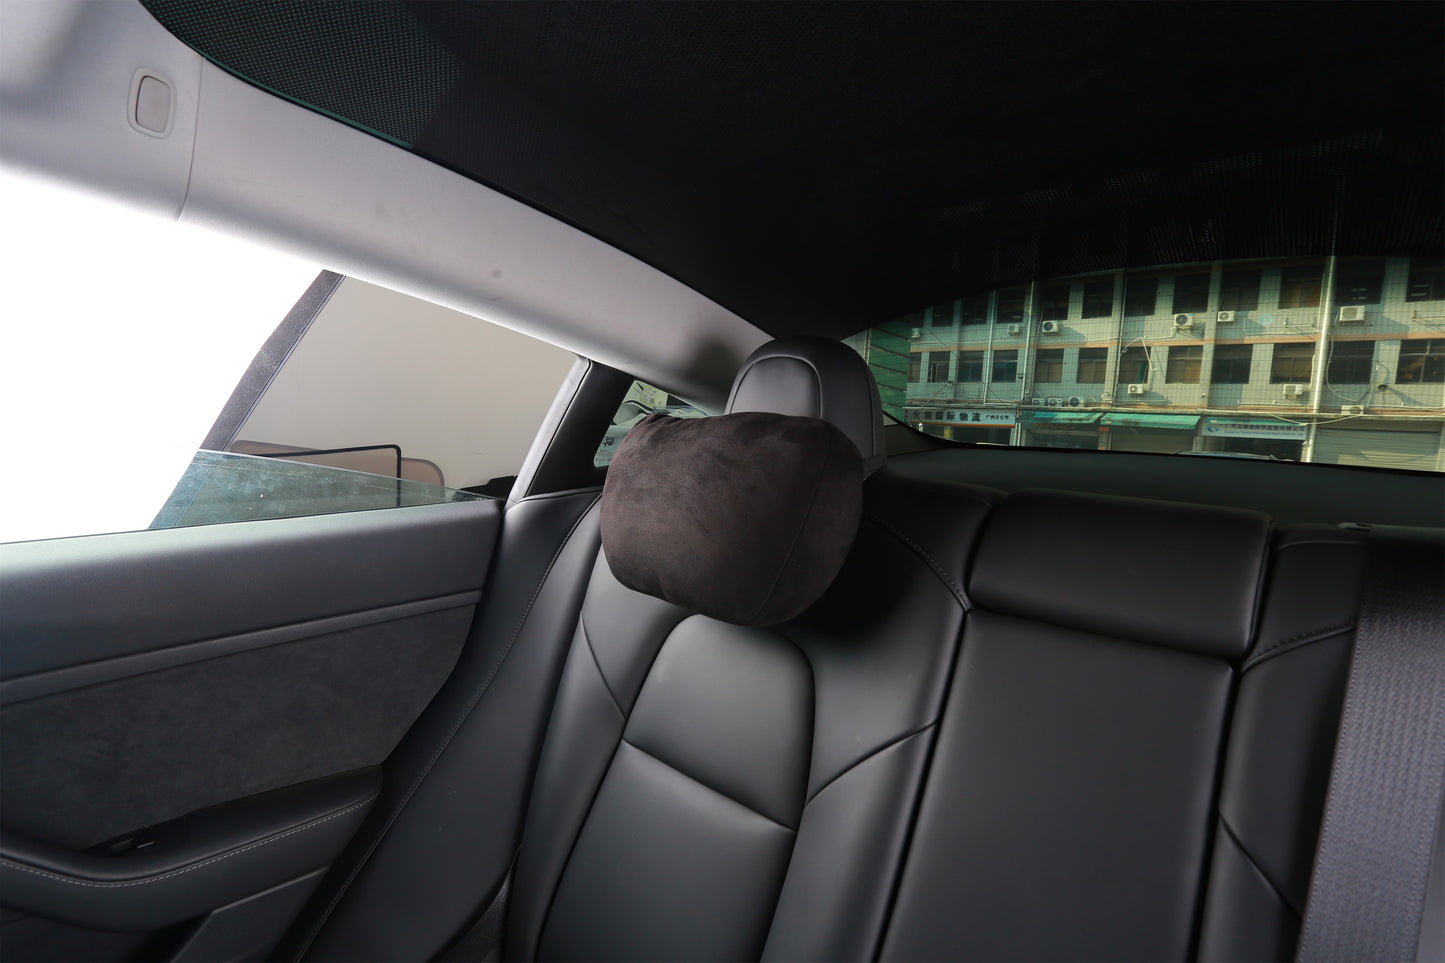 Model S/3/X/Y: Headrest & Back Support Pillows (2 PCs)